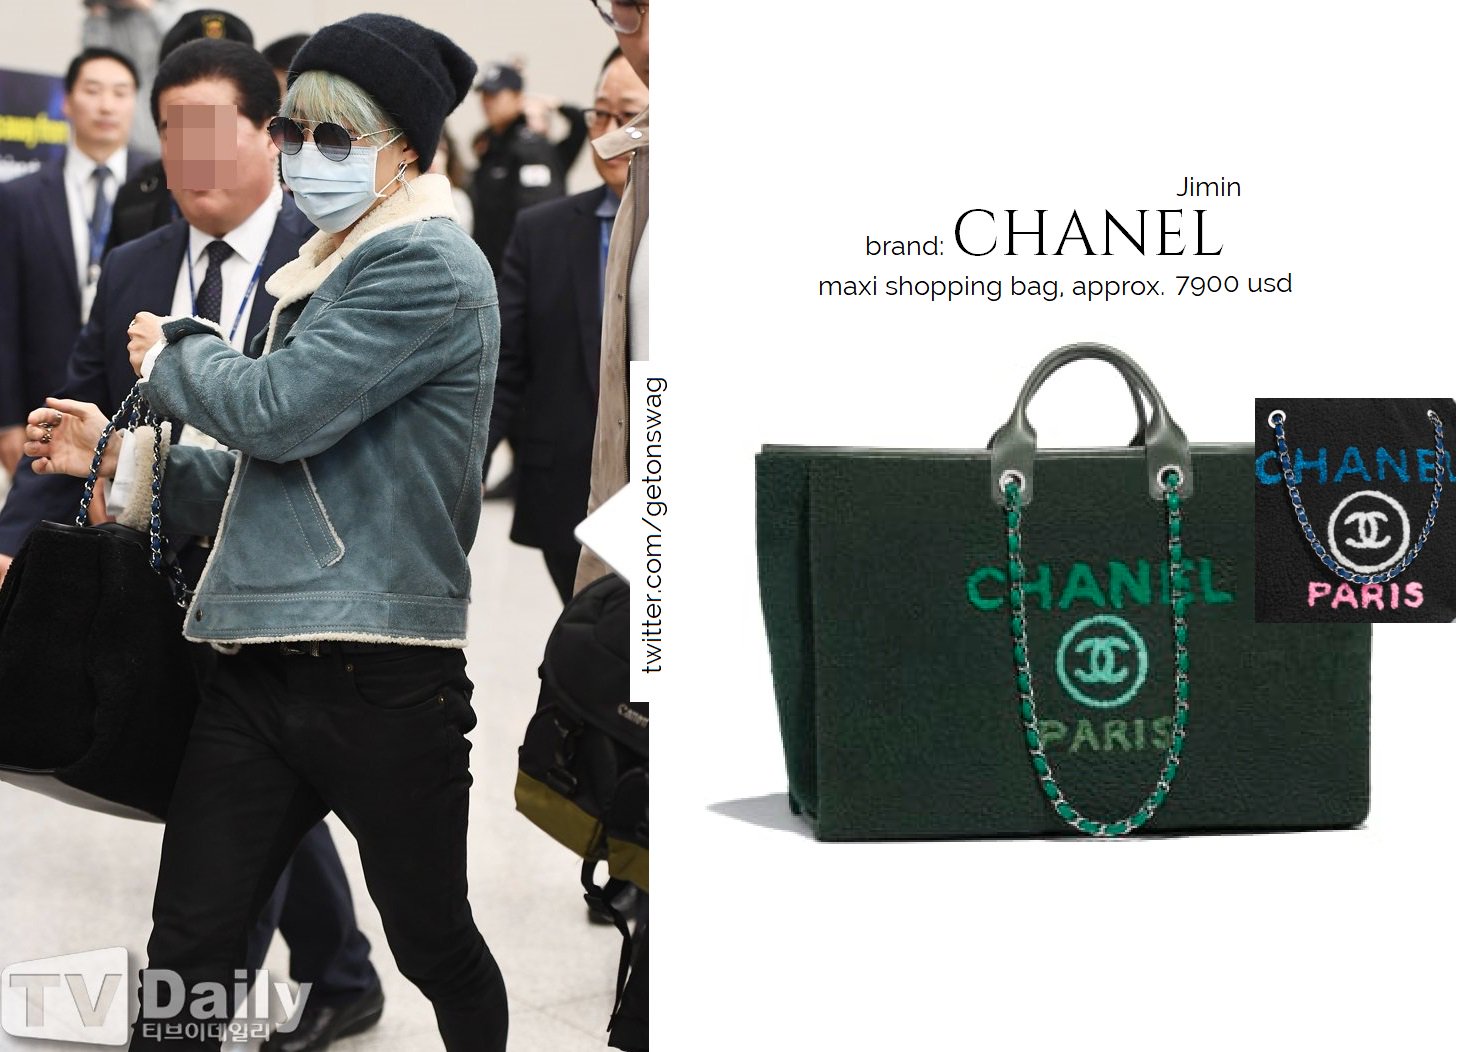 Beyond The Style ✼ Alex ✼ on X: JIMIN #JIMIN 181024 airport #BTS #지민  #방탄소년단 CHANEL maxi shopping bag in black/ pink/ blue, approx 7900 usd   / X